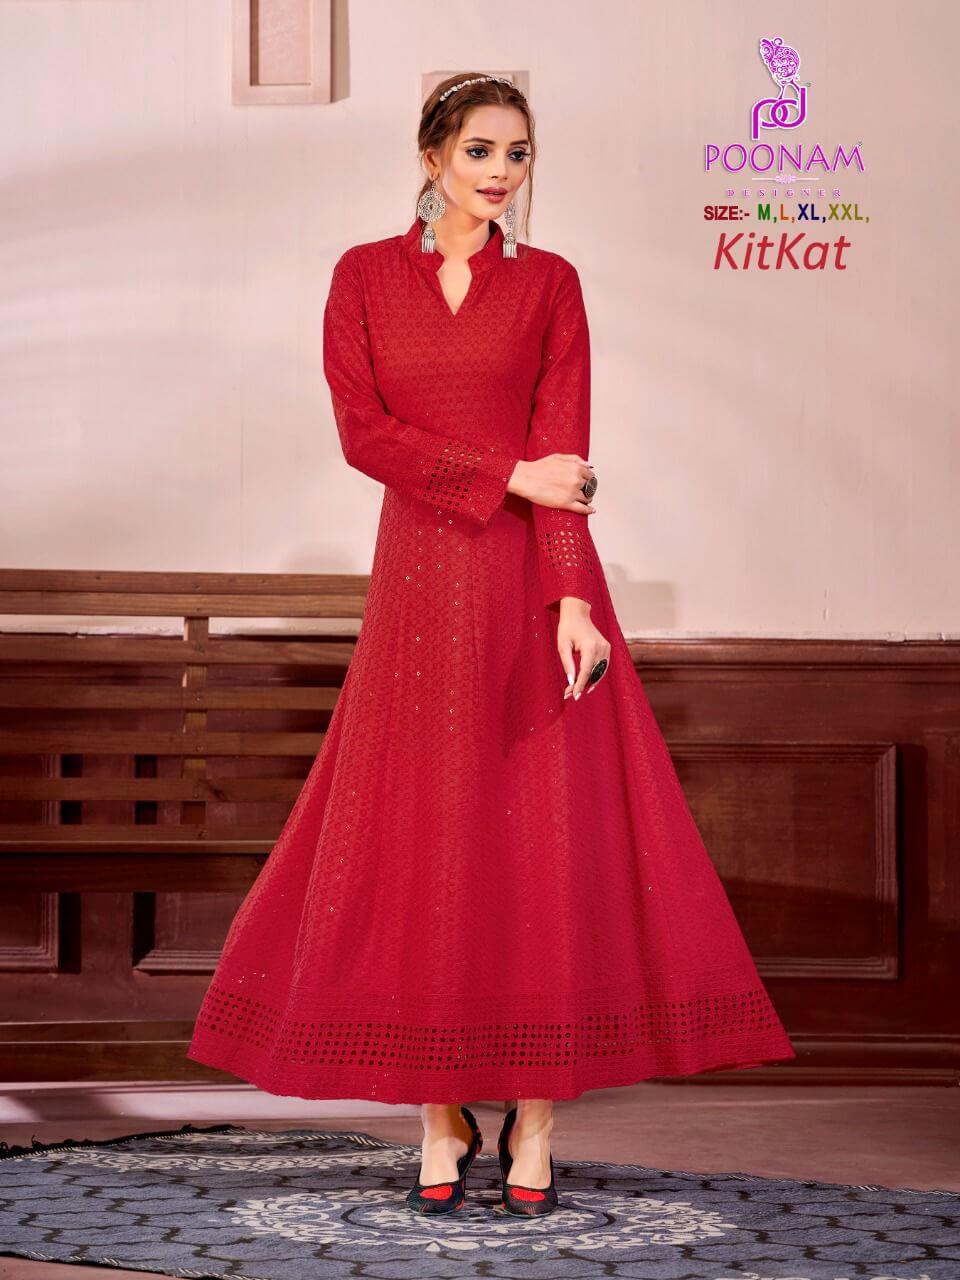 poonam designer kitkat party wear gown catalog in wholesale price ...